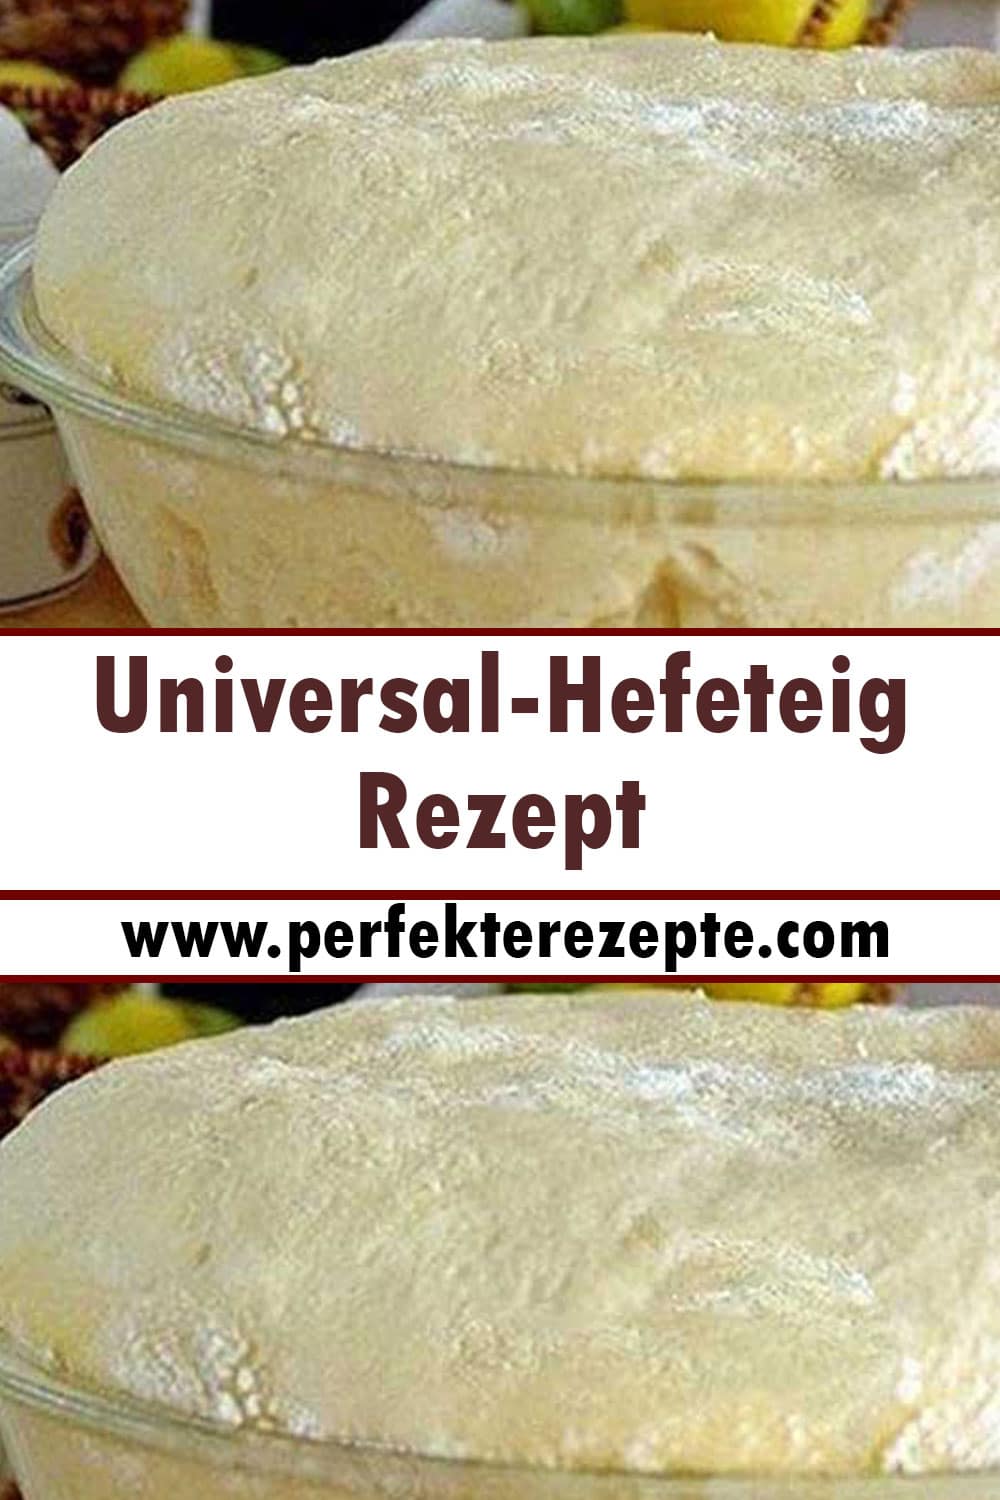 Universal-Hefeteig Rezept